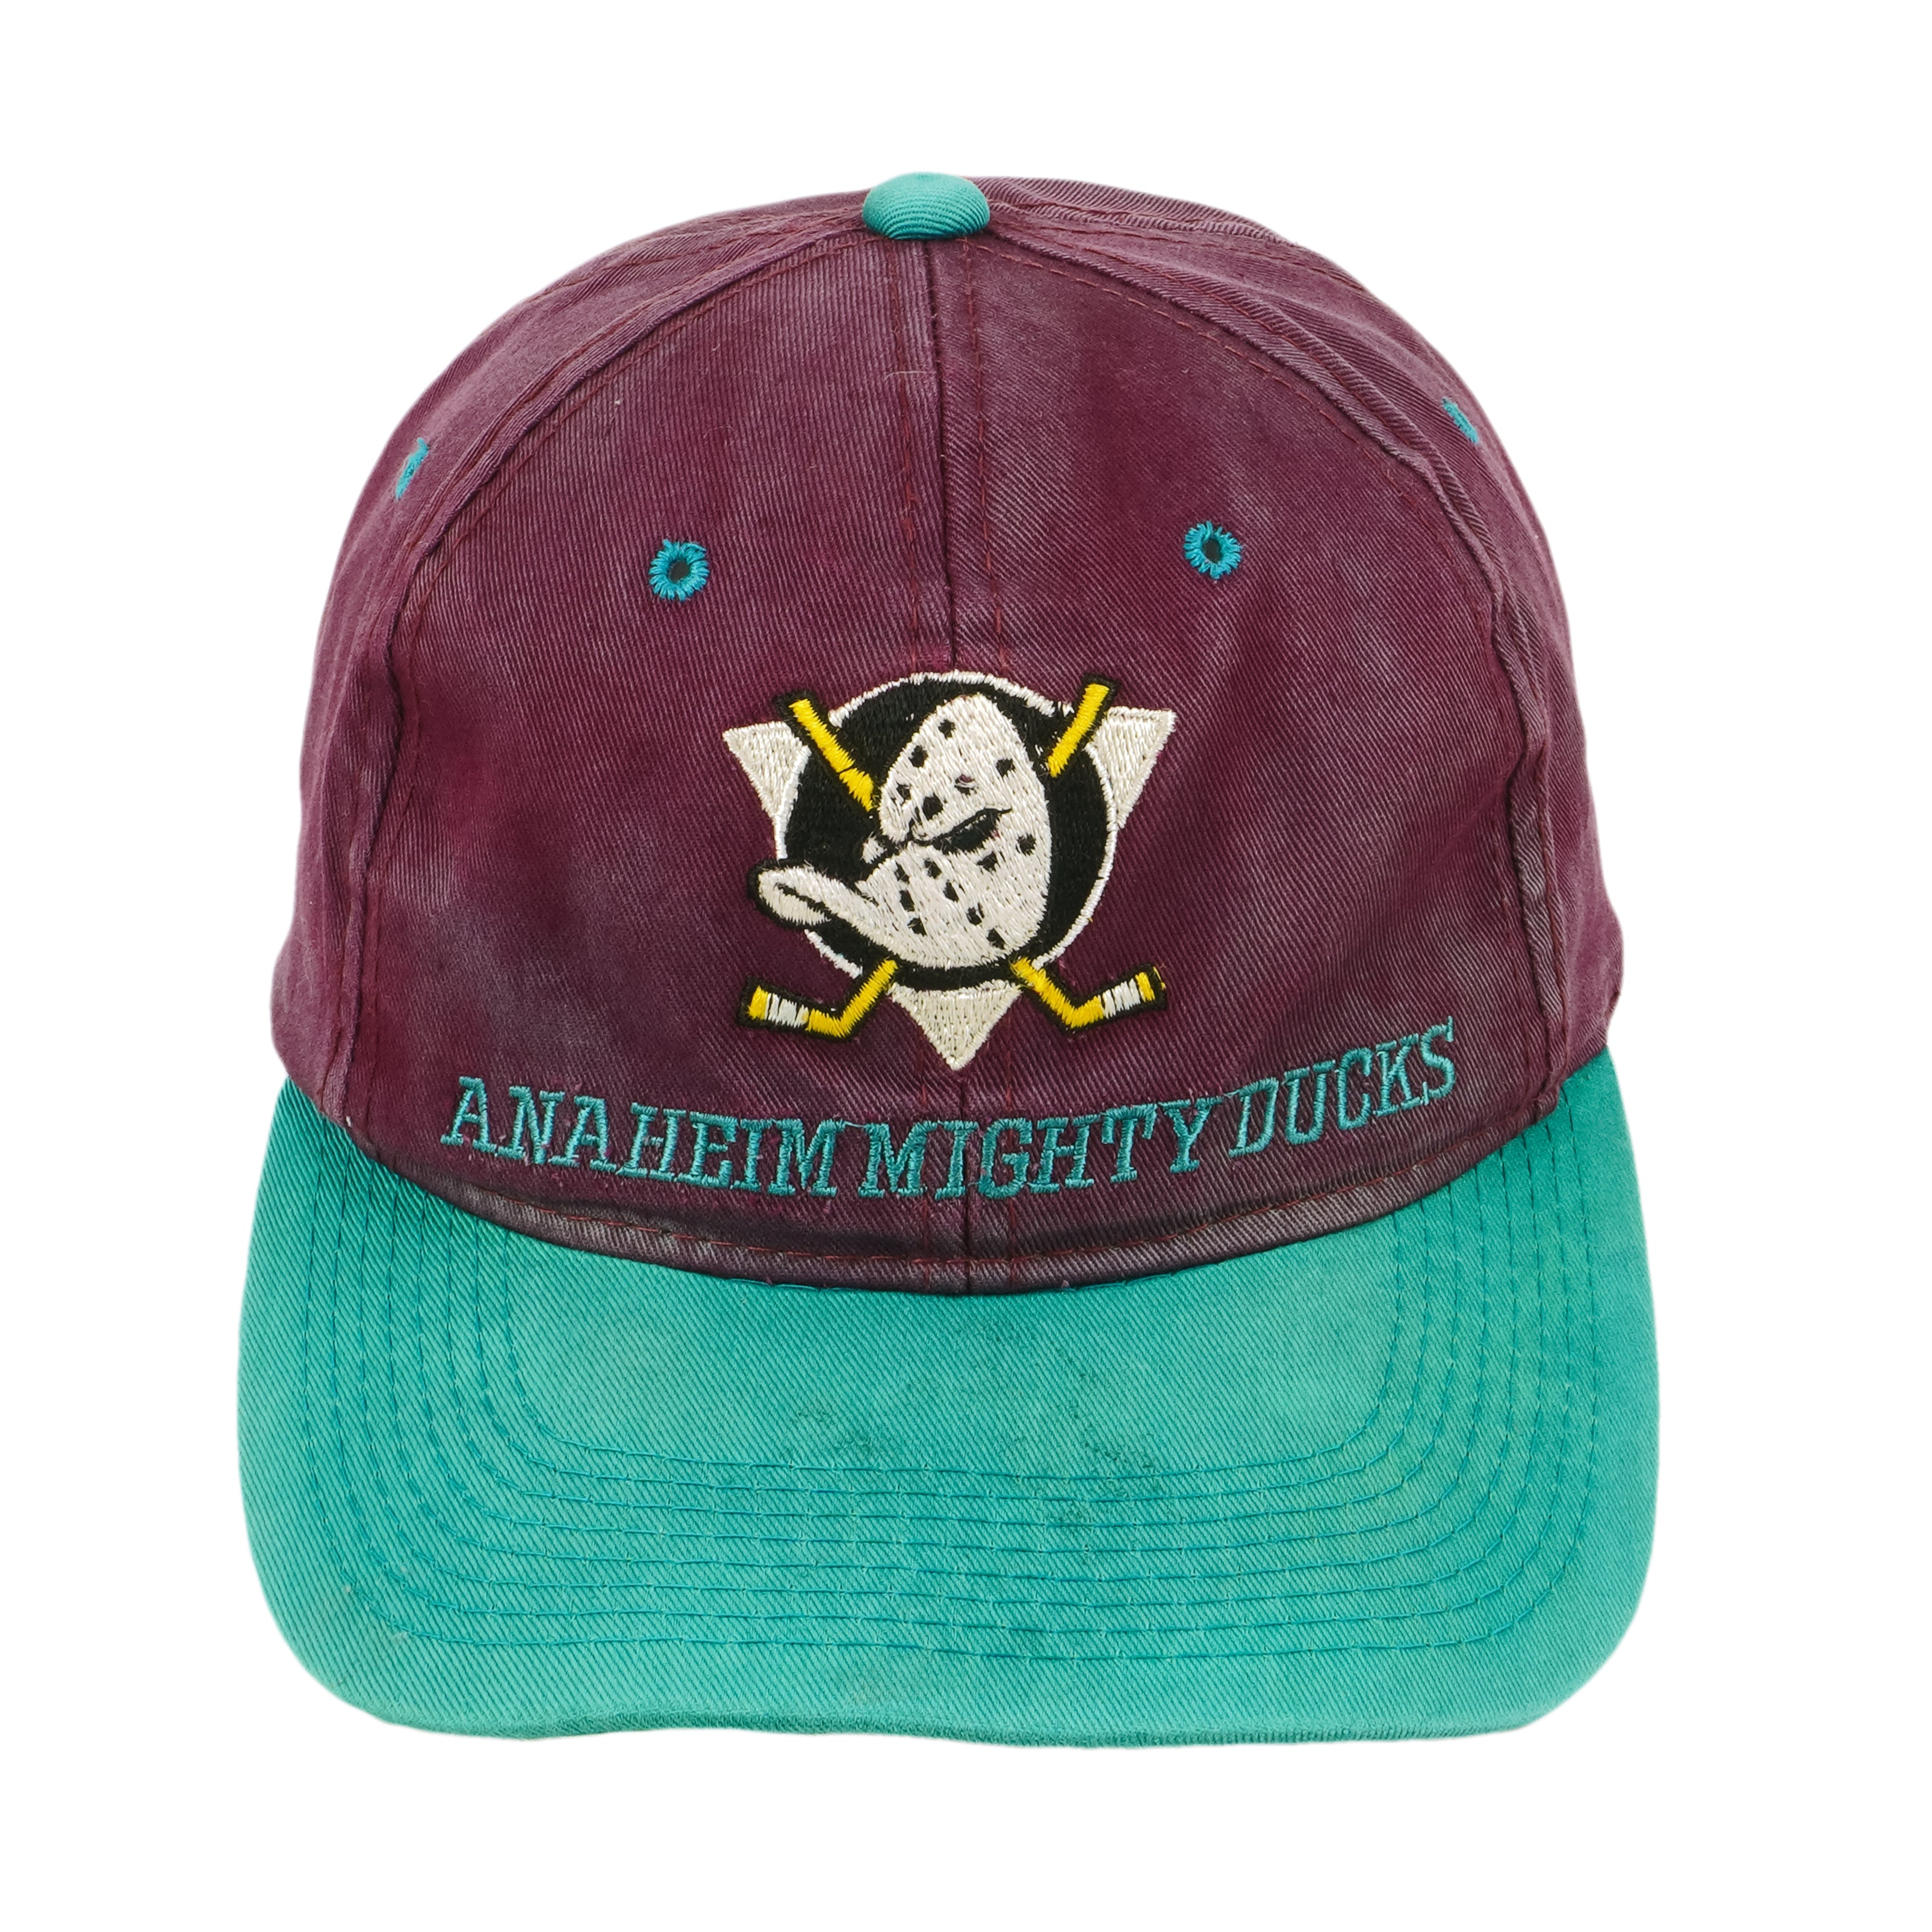 NHL Minnesota North Stars Vintage Suede Grey Snapback Hat